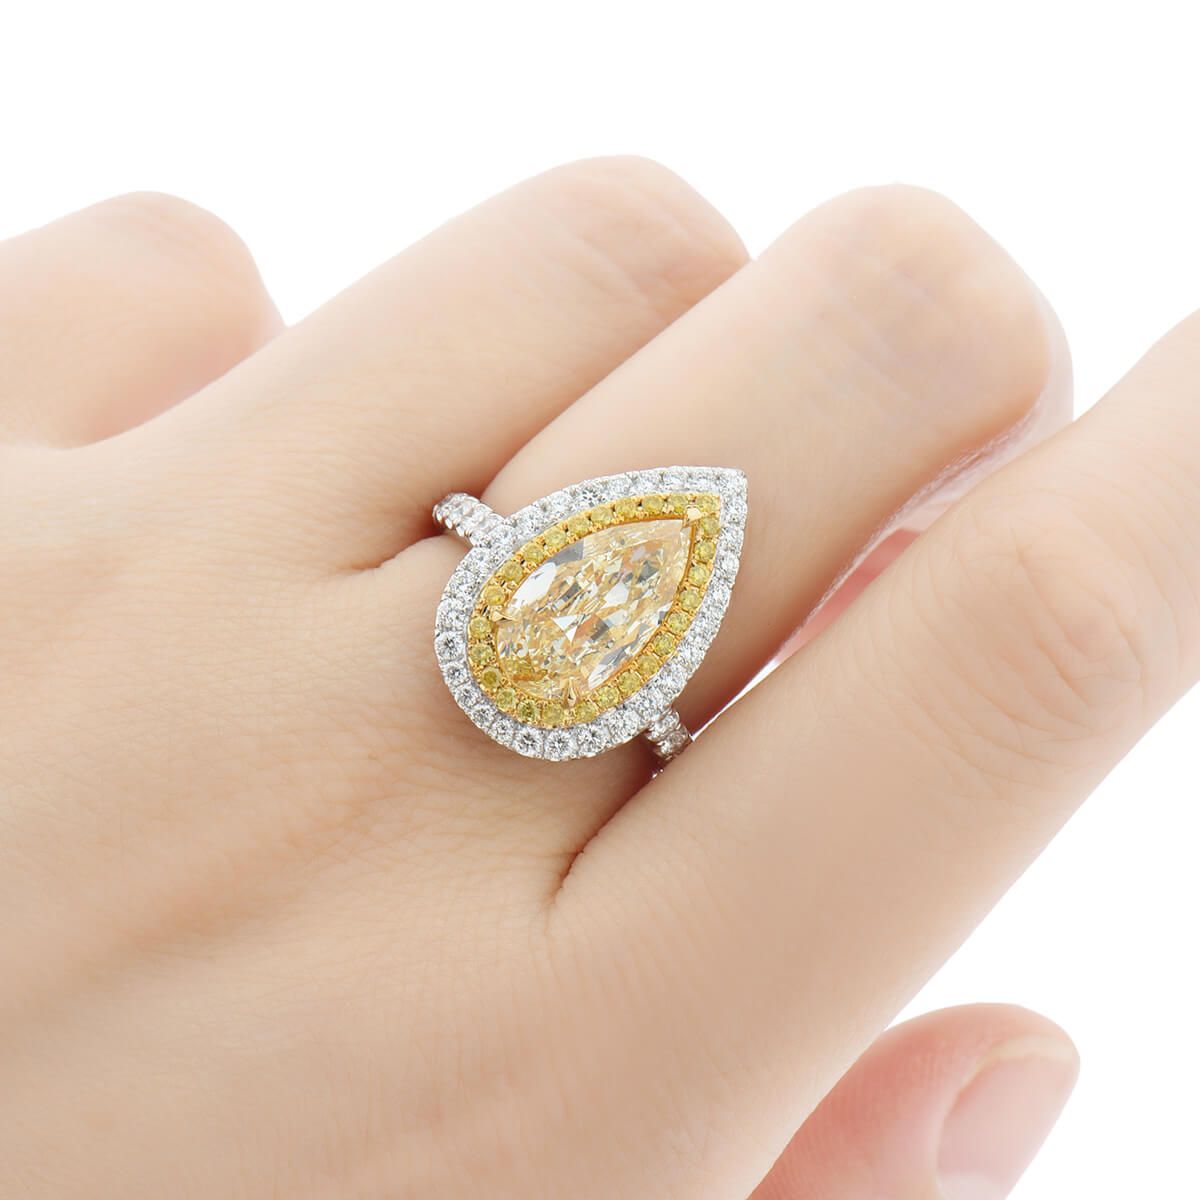 Light Yellow (U-V) Diamond Ring, 3.95 Ct. TW, Pear shape, GIA Certified, 2195371912